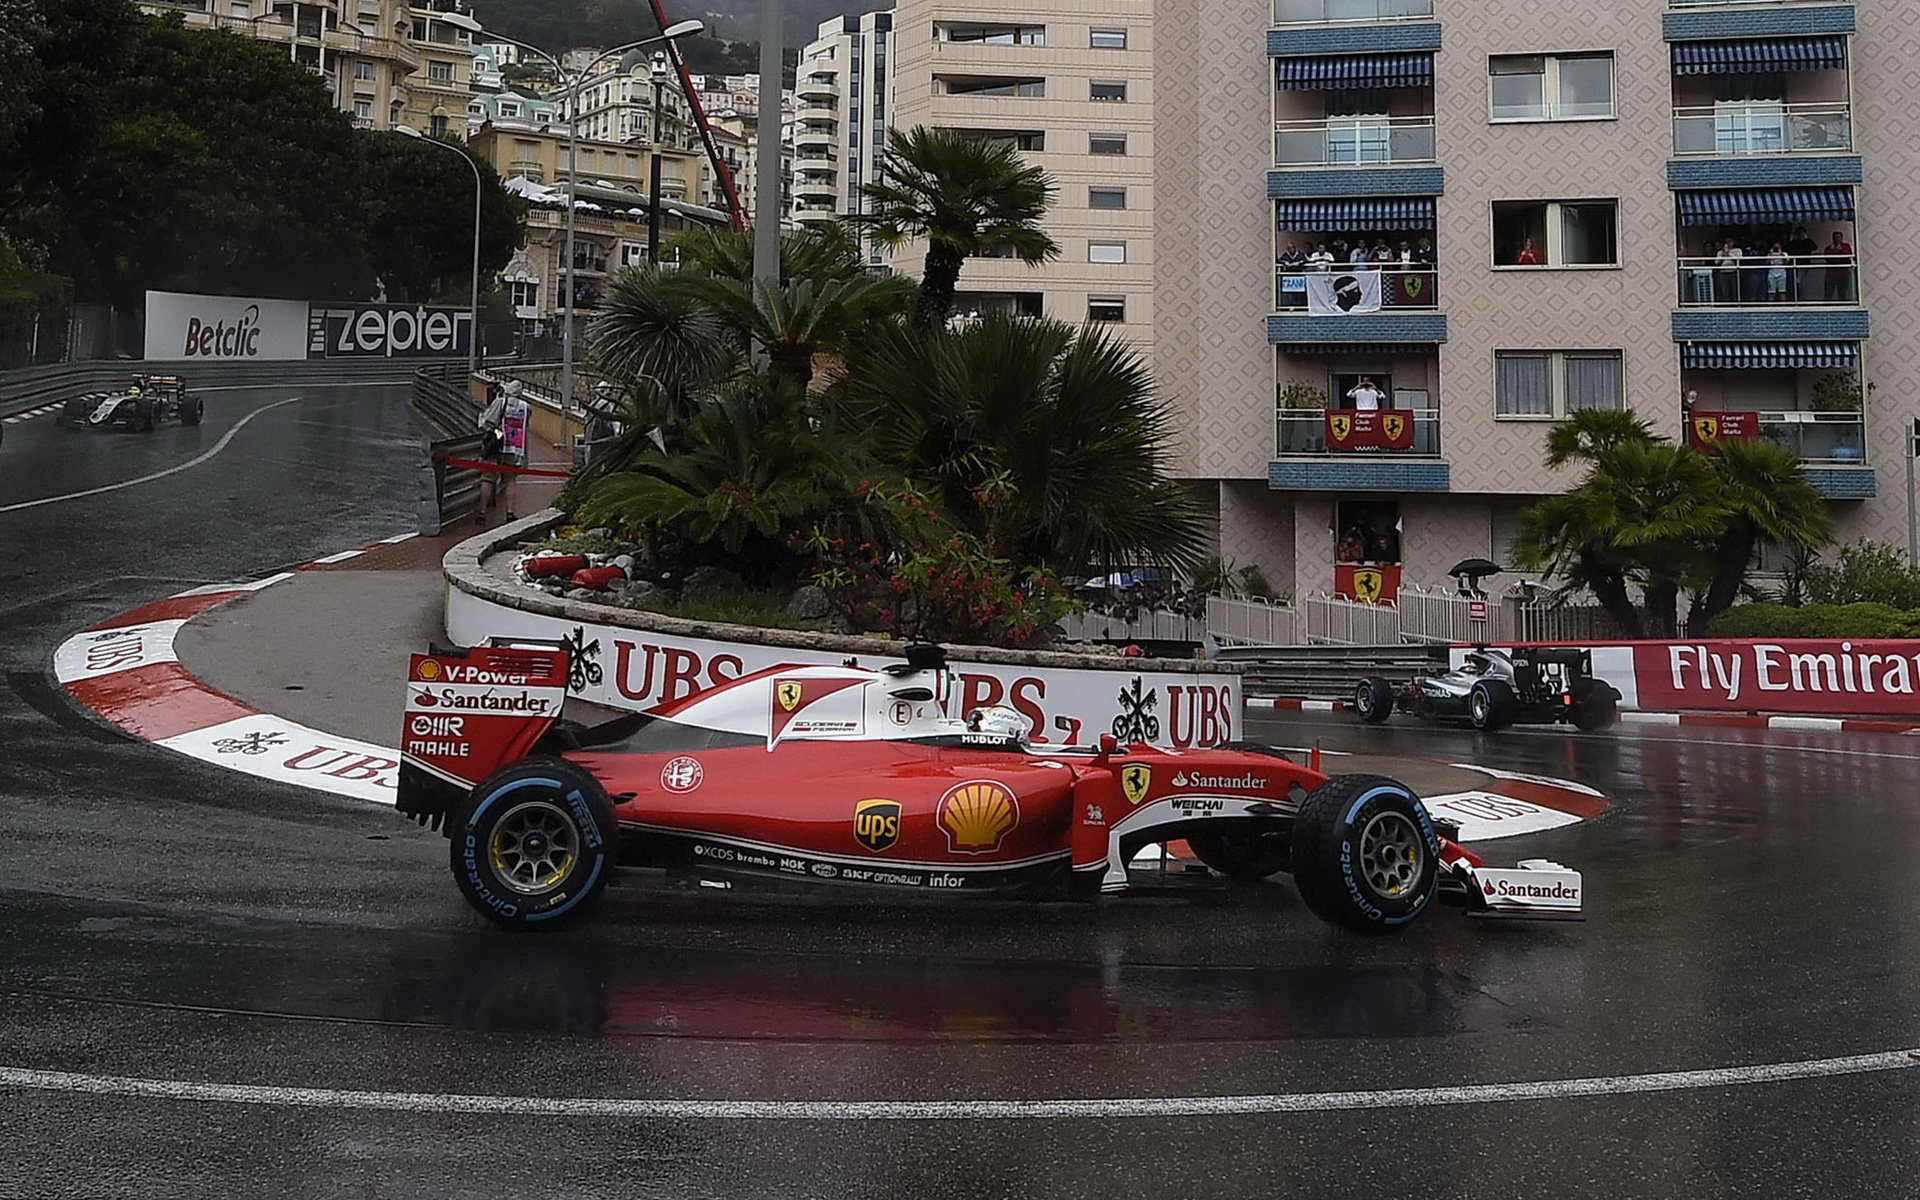 Sebastian Vettel v závodě v Monaku